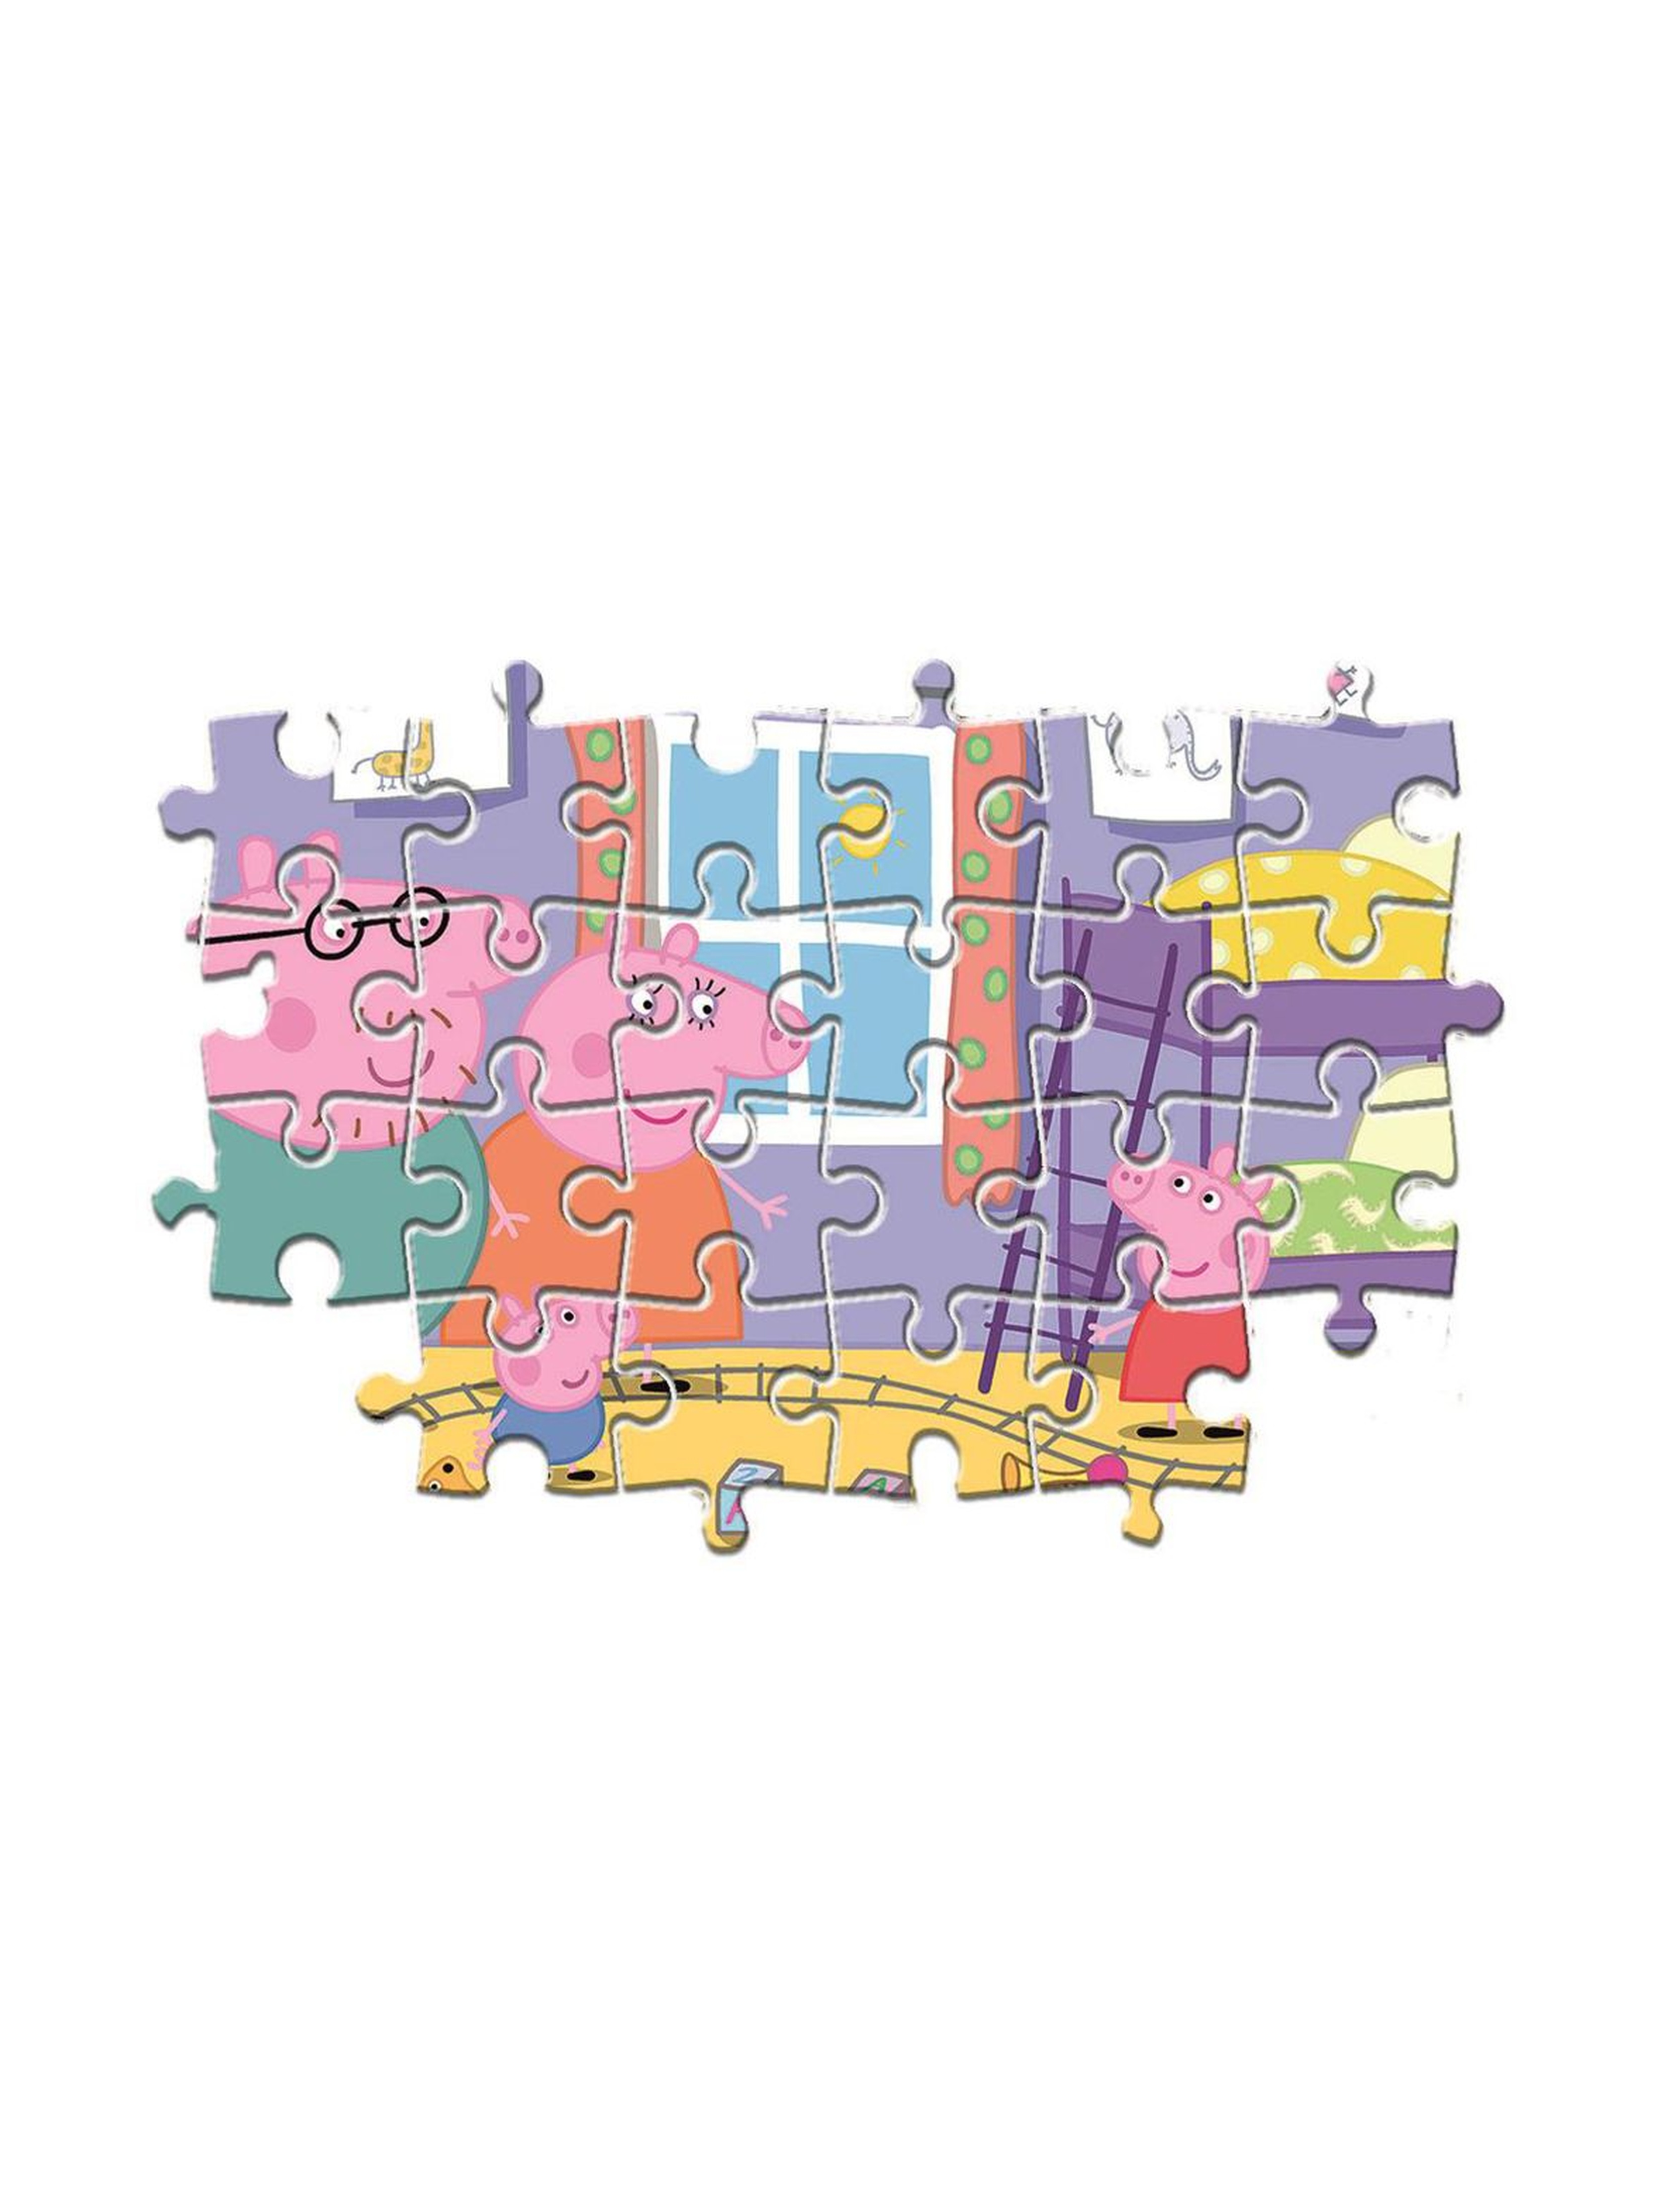 Puzzle Maxi Super Color Świnka Peppa - 60 elementów - wiek 4+